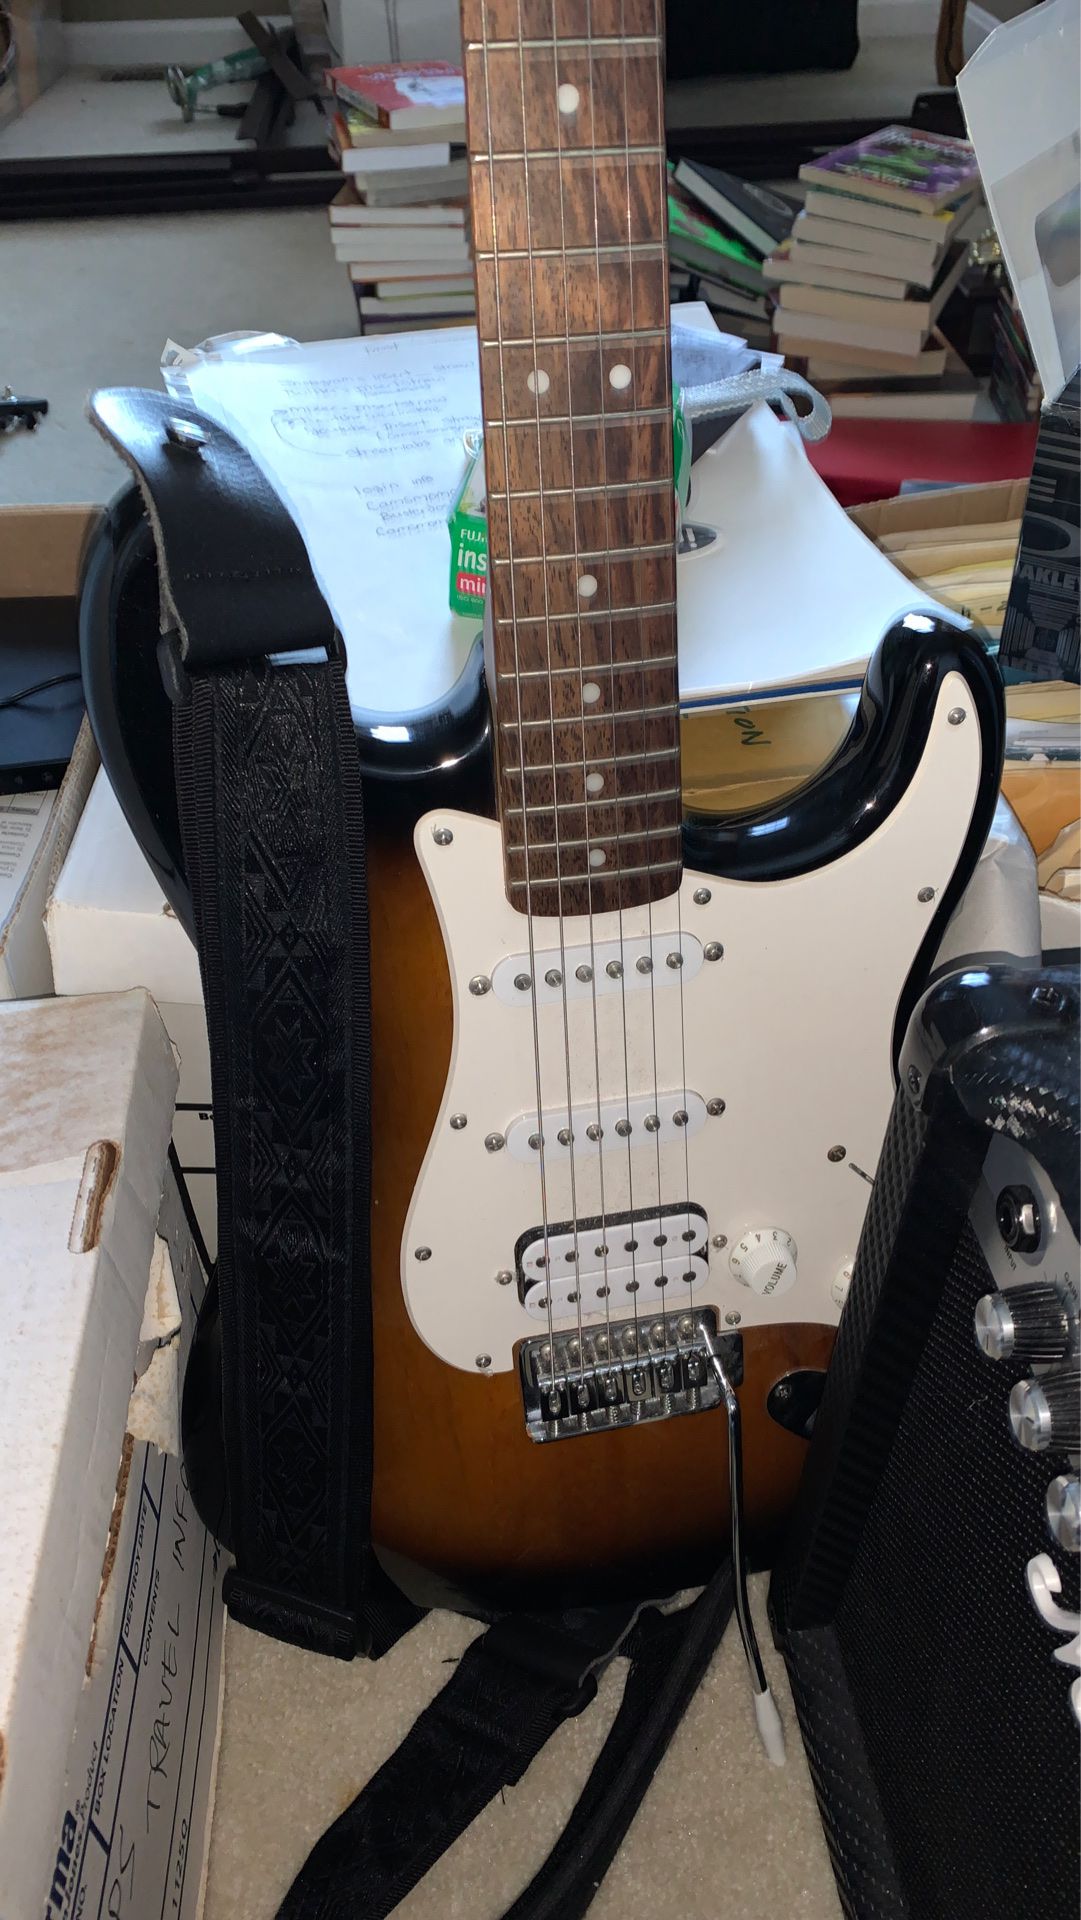 Squire stratacast guitar (fender) and amp